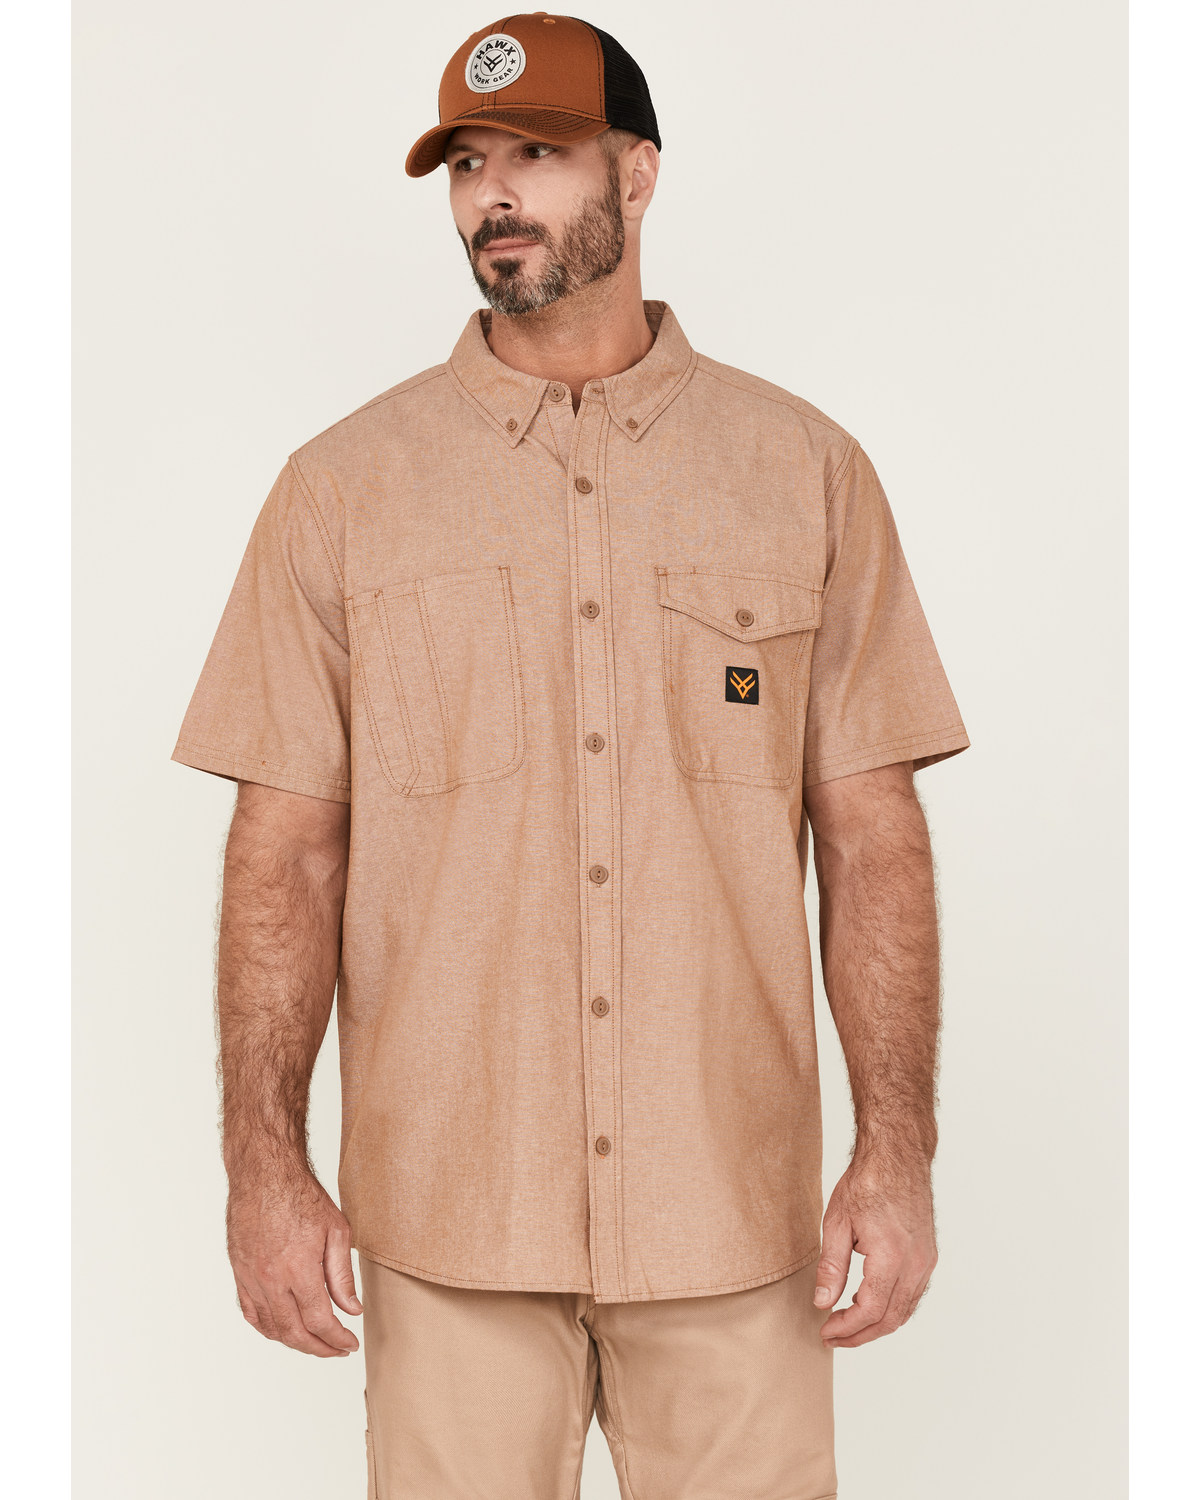 Hawx Men's Solid Short Sleeve Button-Down Work Shirt